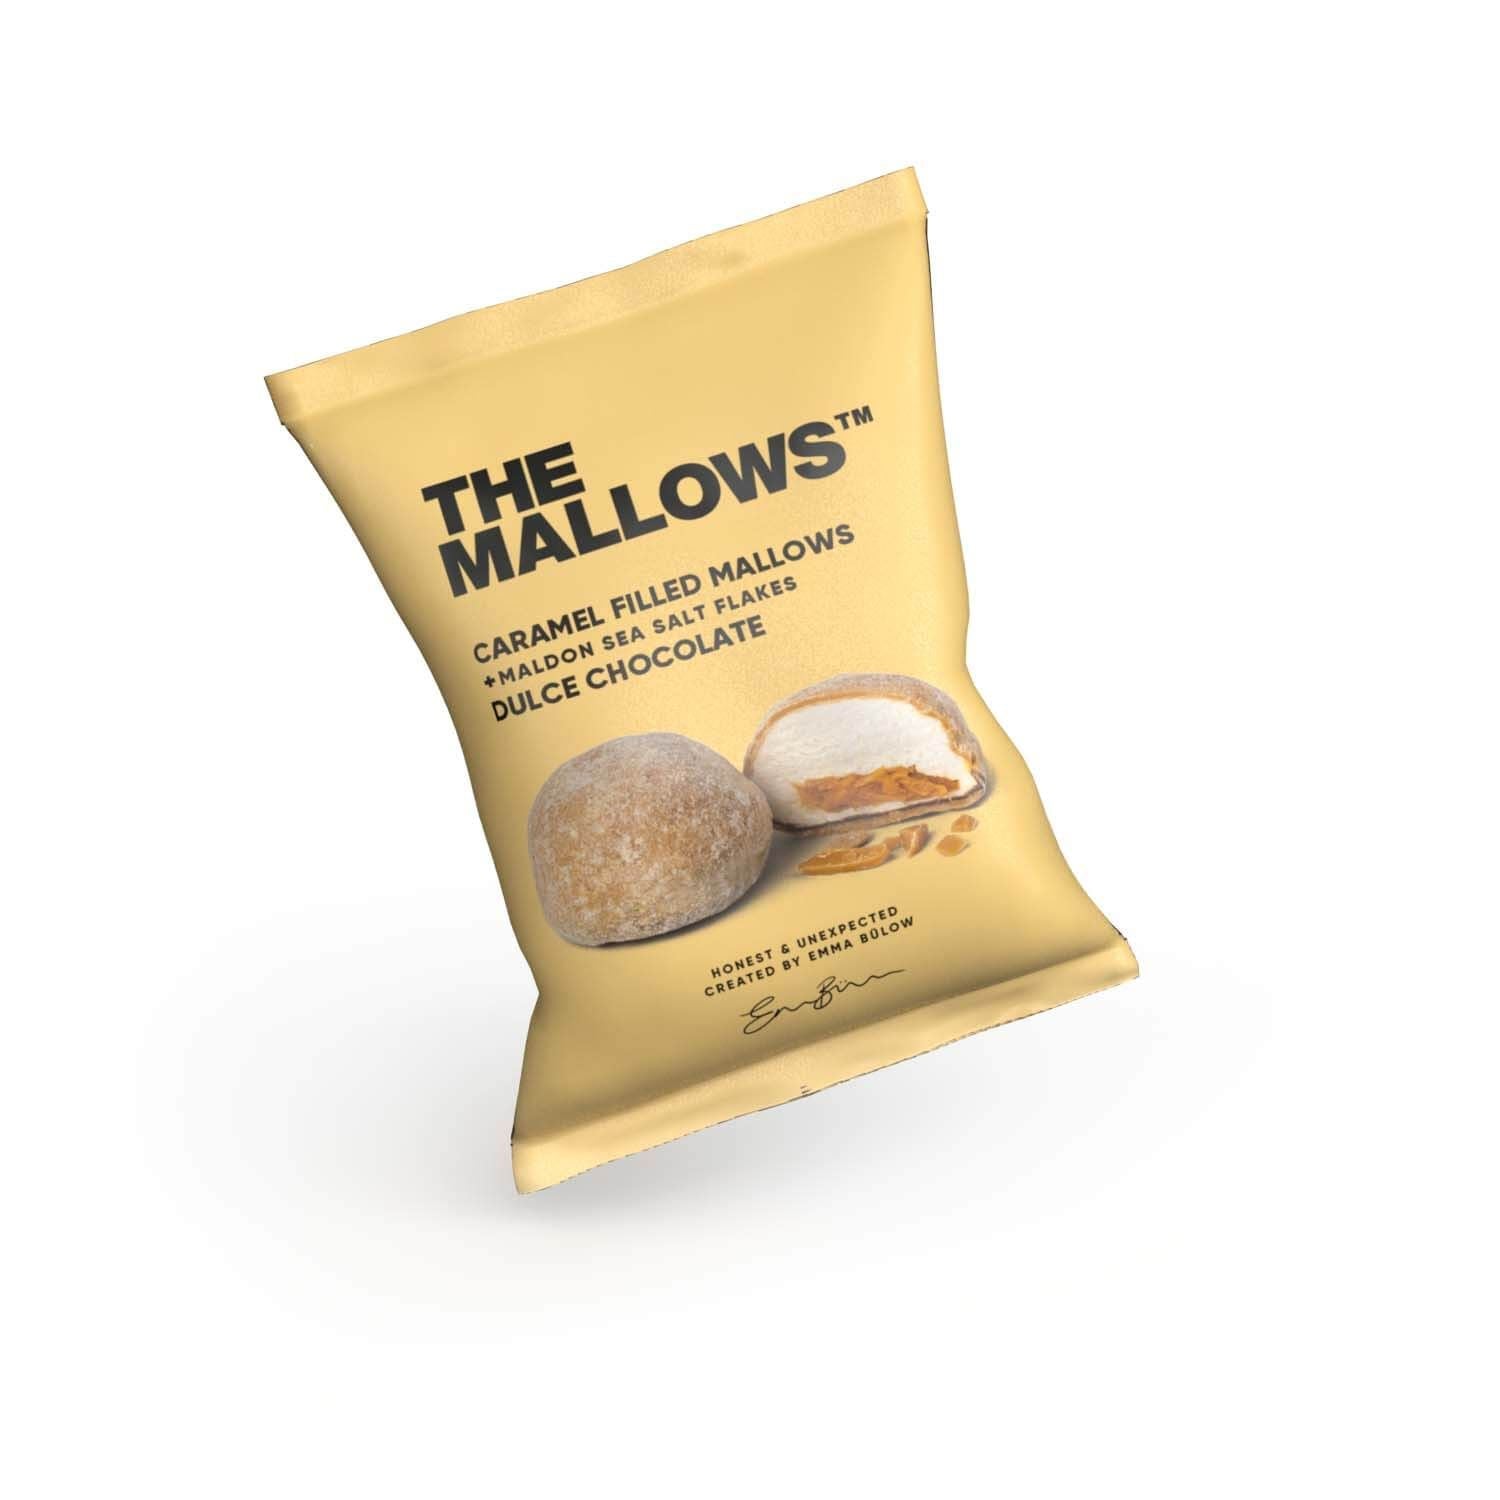 The Mallows Marshmallows med karamellfyllning & choklad - dulce choklad, 18g